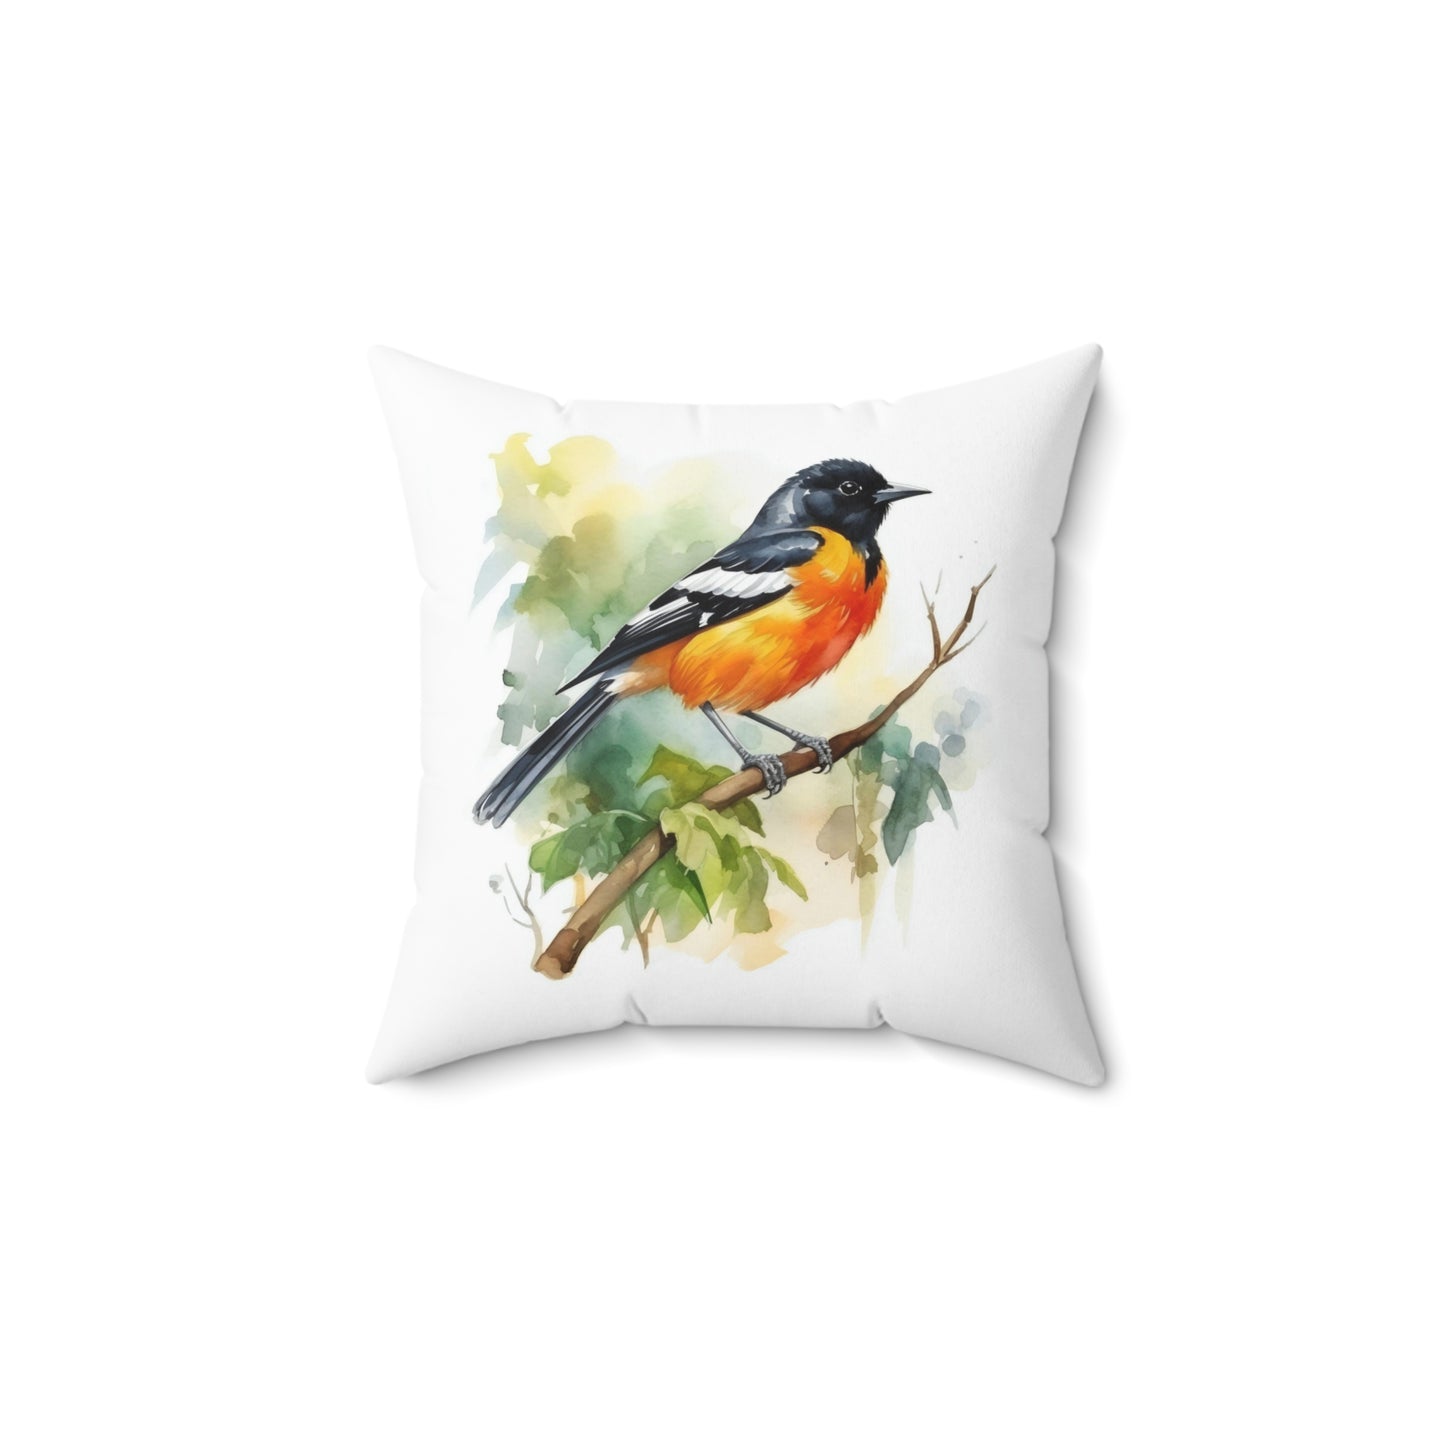 Oriole Pillow, Watercolor Oriole Decorative Pillow, Oriole Accent Pillow, Square Bird Cushion, Bird Pillow, Nature Pillow, Concealed Zipper